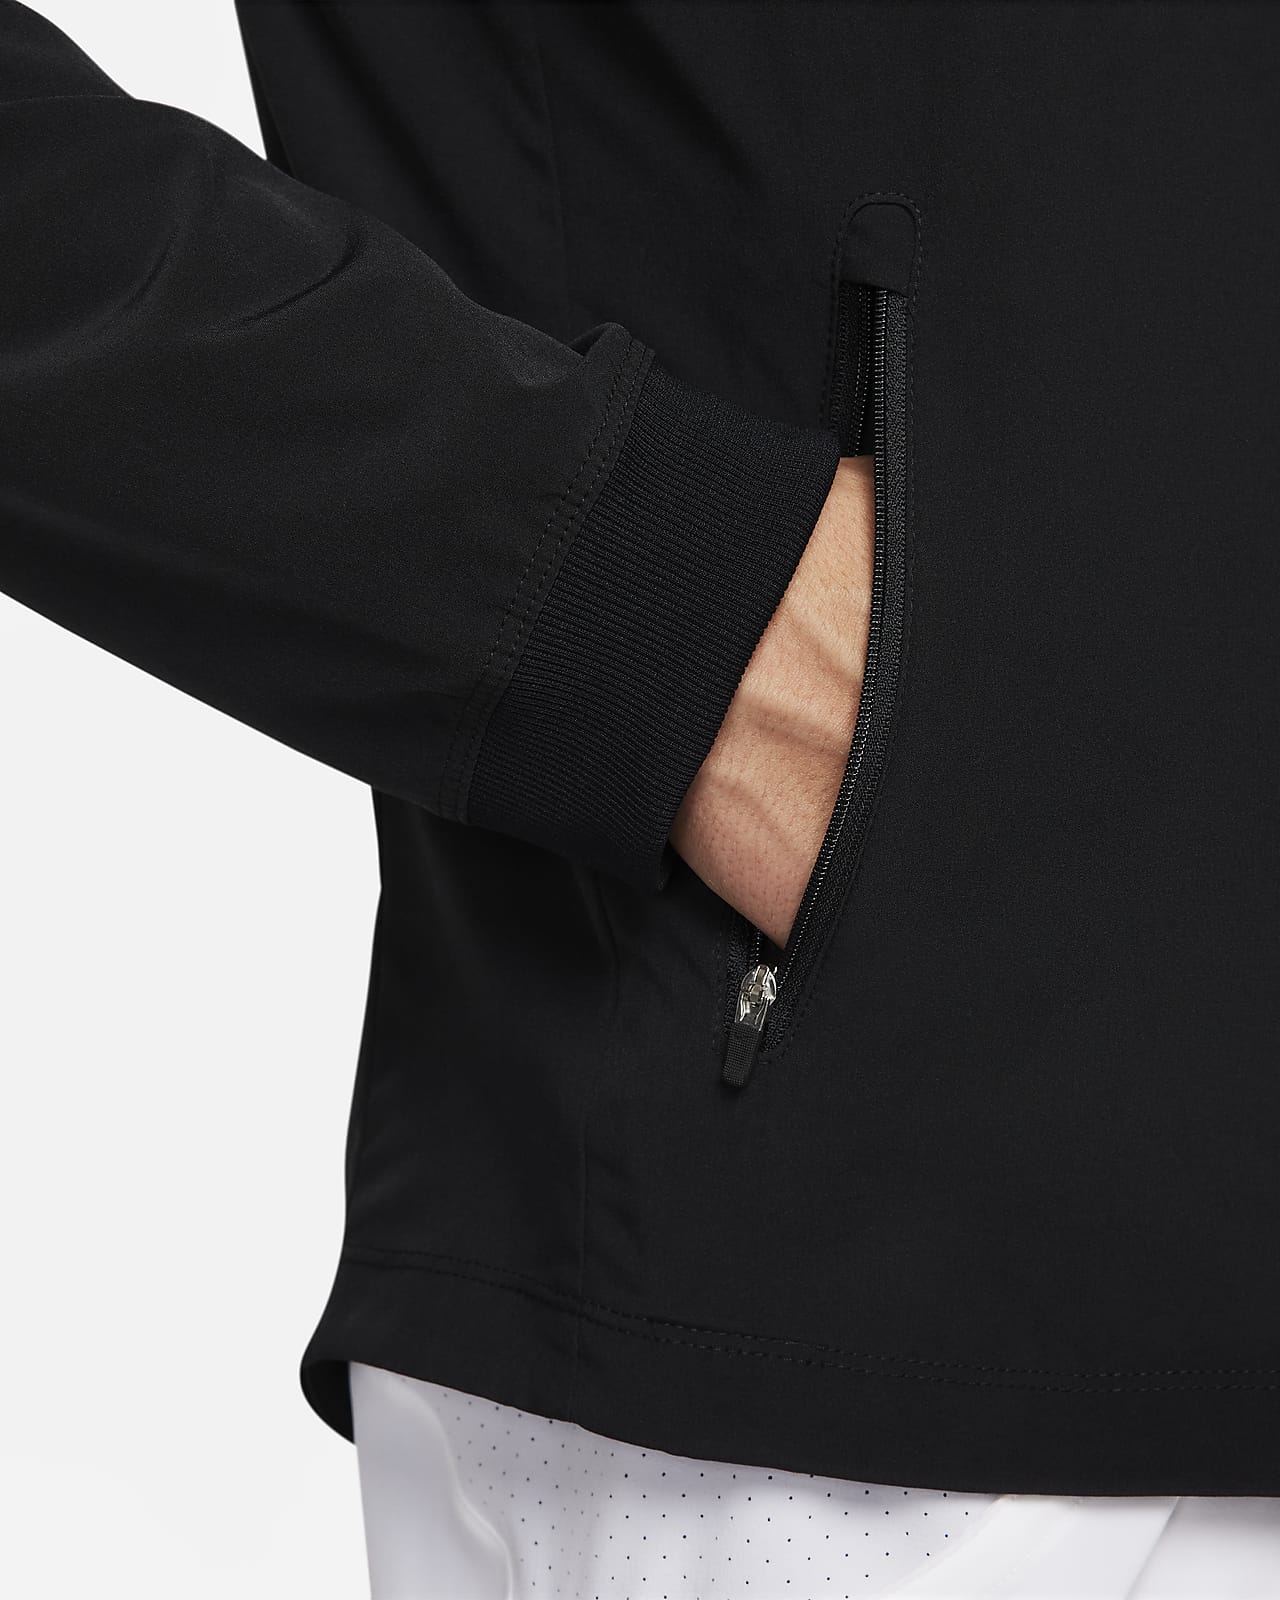 NIKE Men Dri-Fit Foam Woven Jacket Running Black Shirts Top Jackets  FB7500-010 | eBay